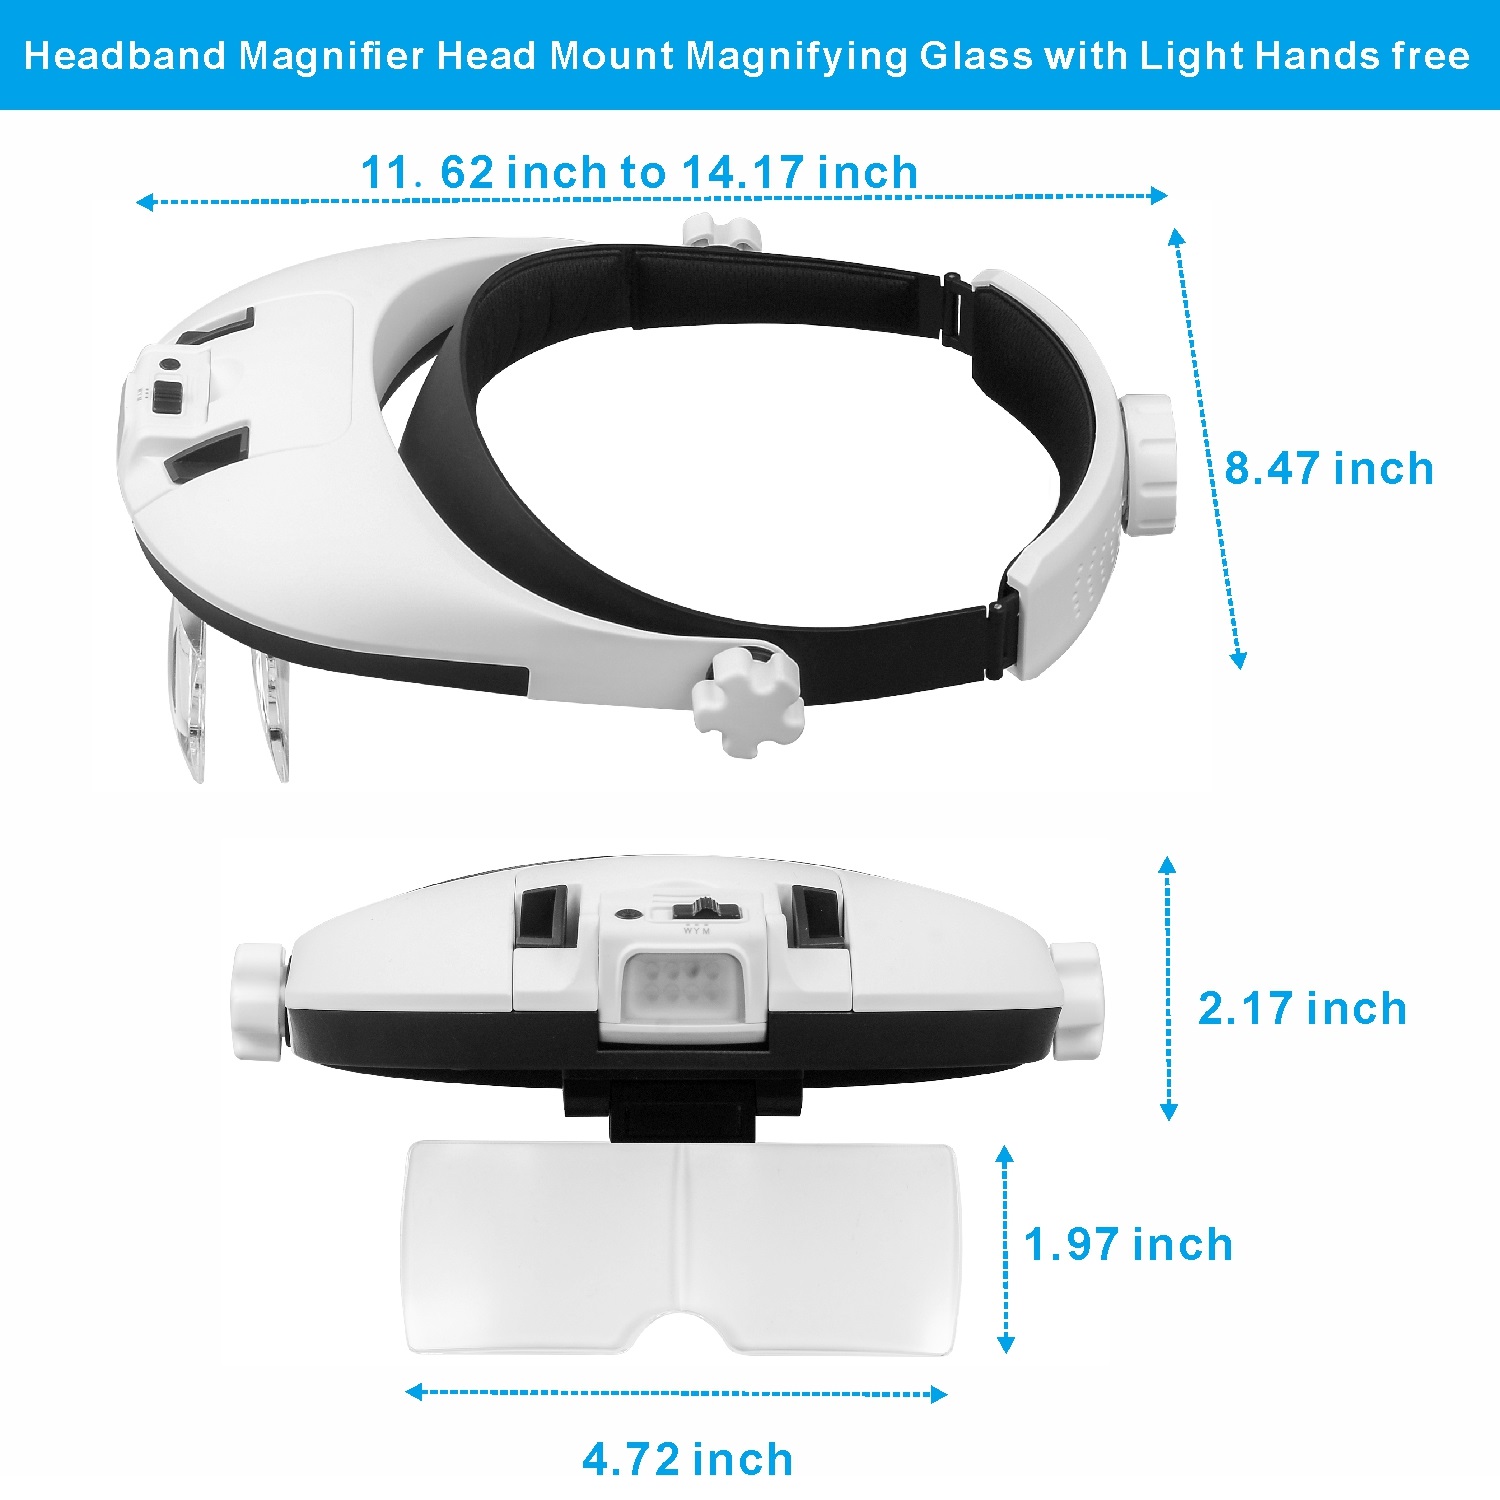 Big Lens Headband Magnifier with 8 LEDs MG81000N